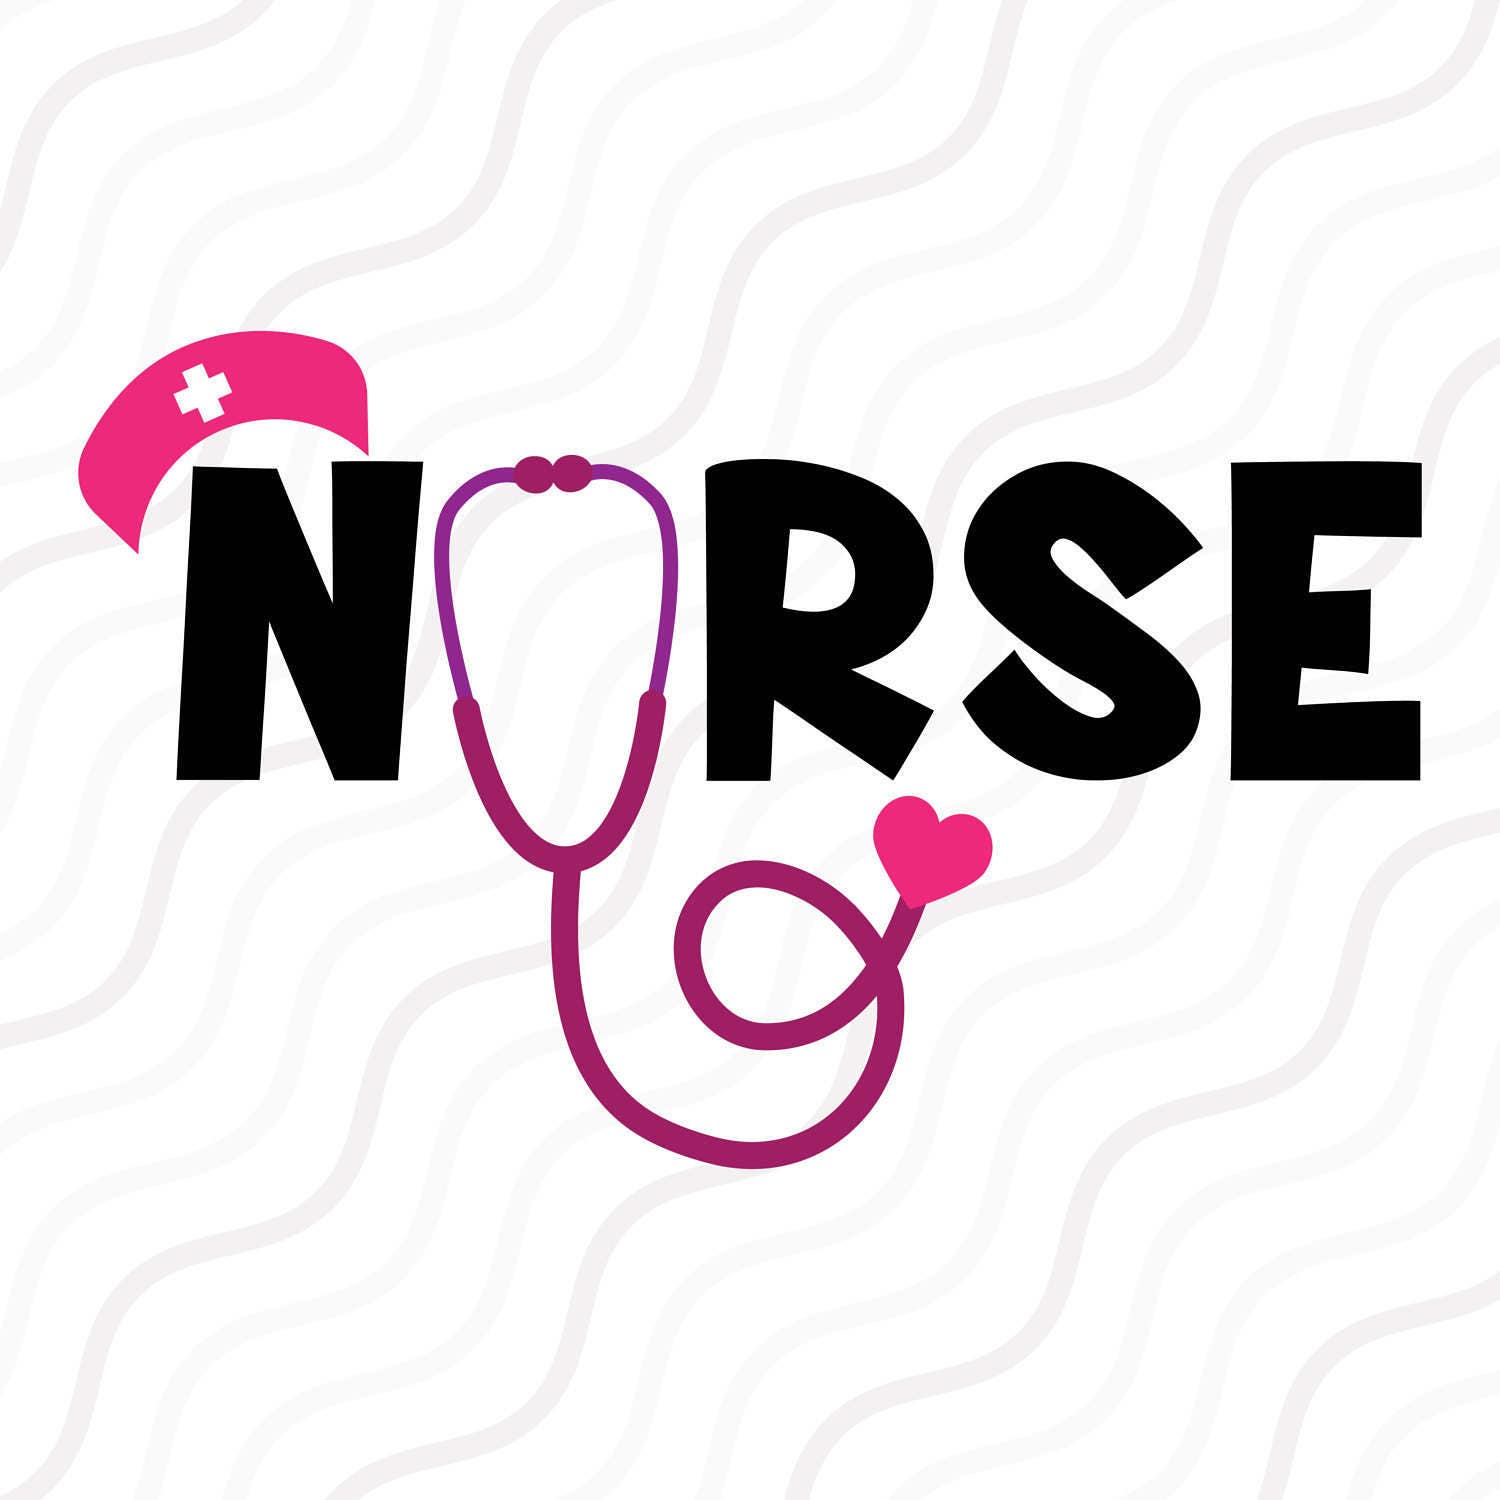 Download Nurse SVG Nurse Stethoscope SVG Nurse Life SVG Cut table